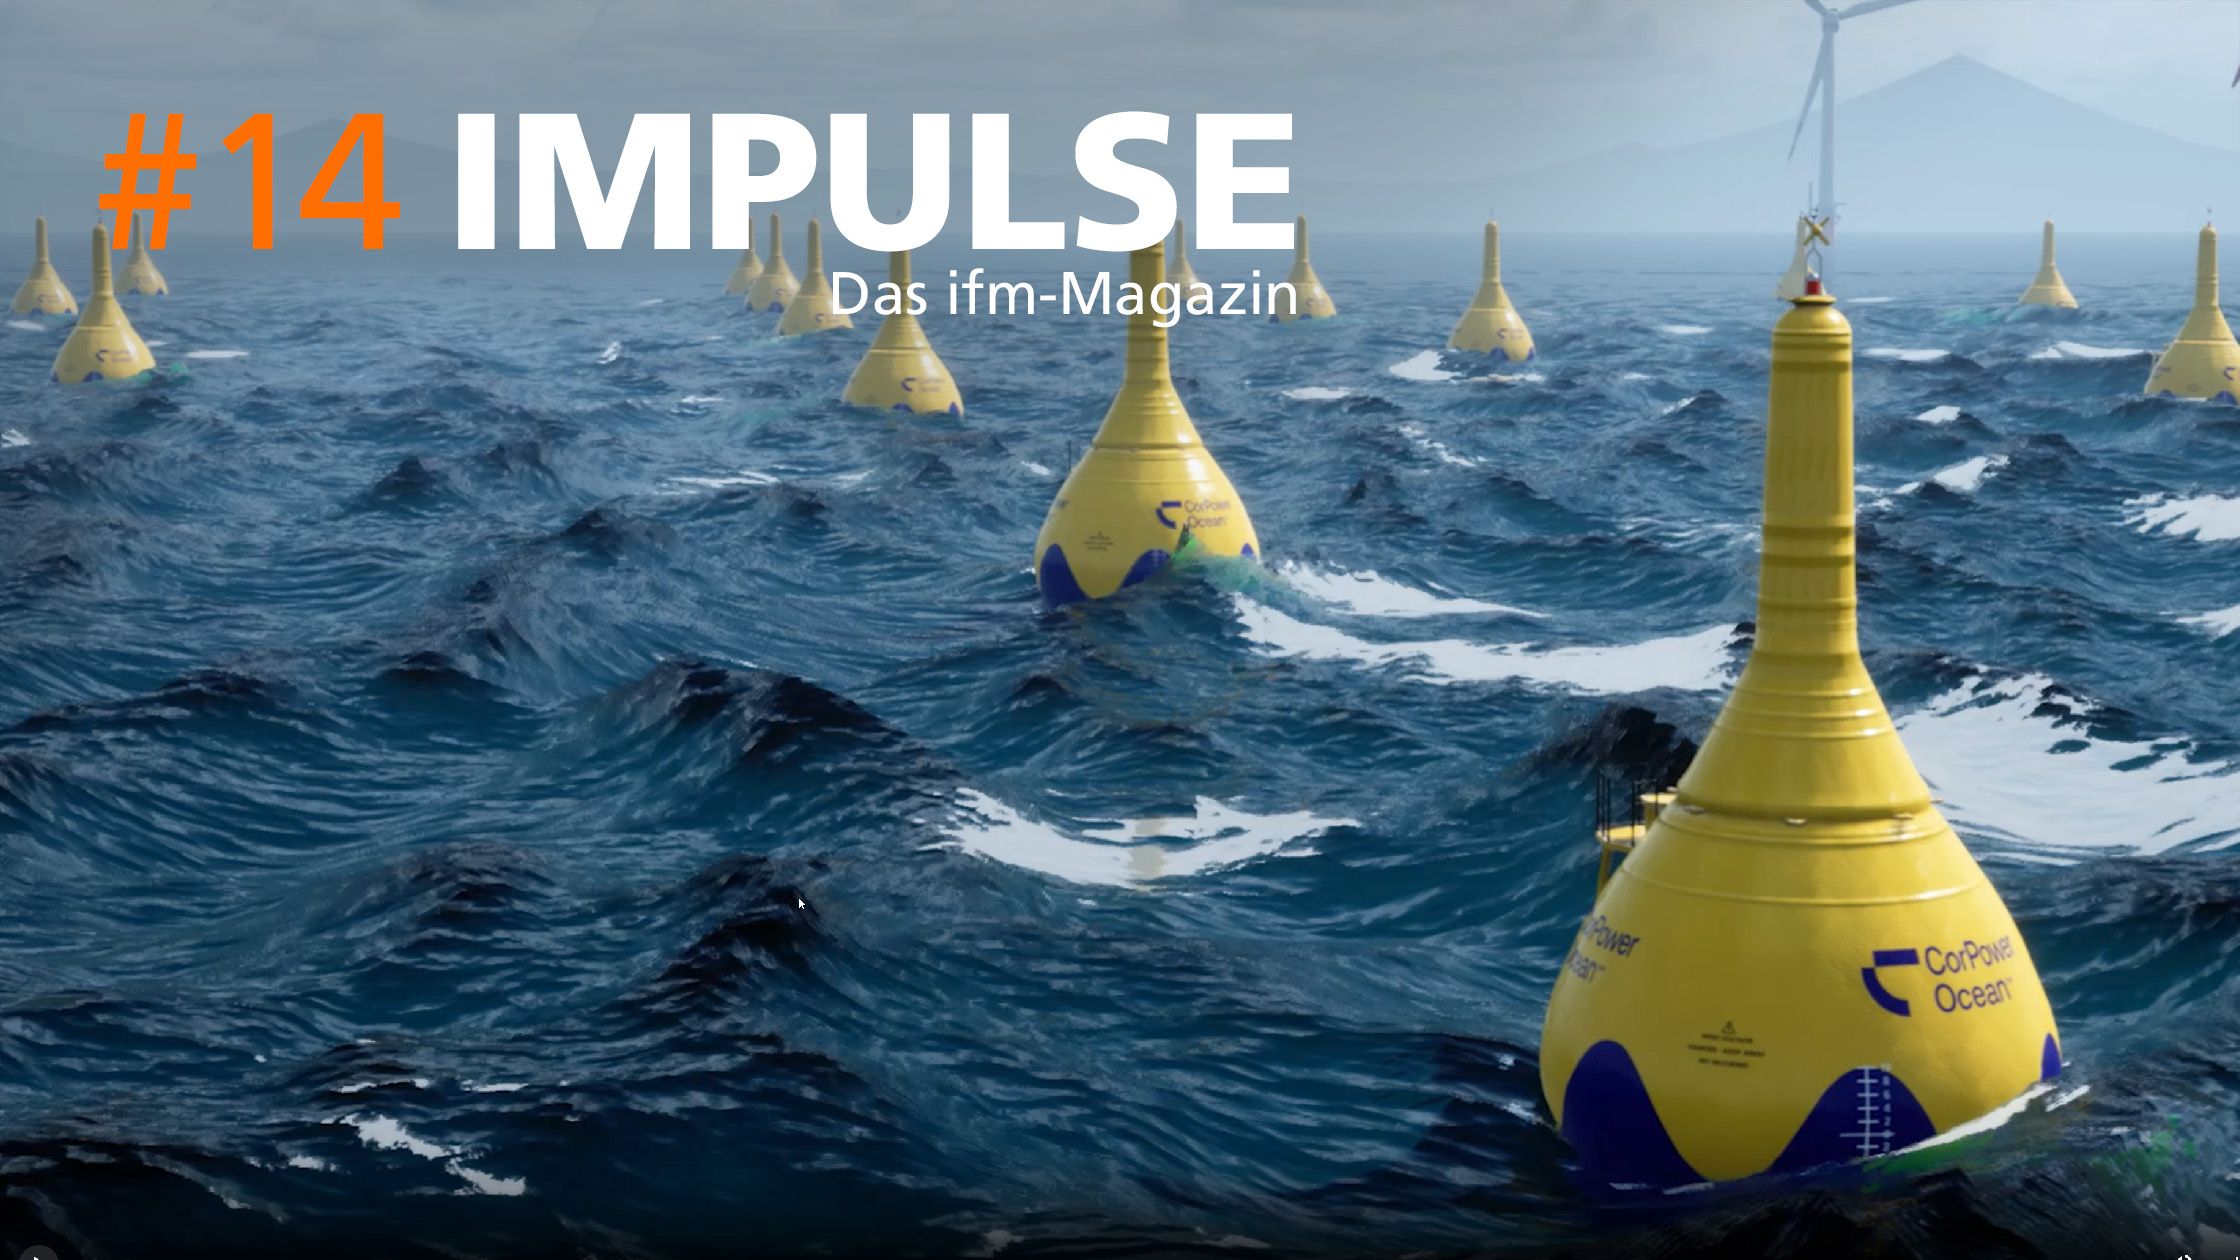 Edición número 14 de Impulse: energías renovables